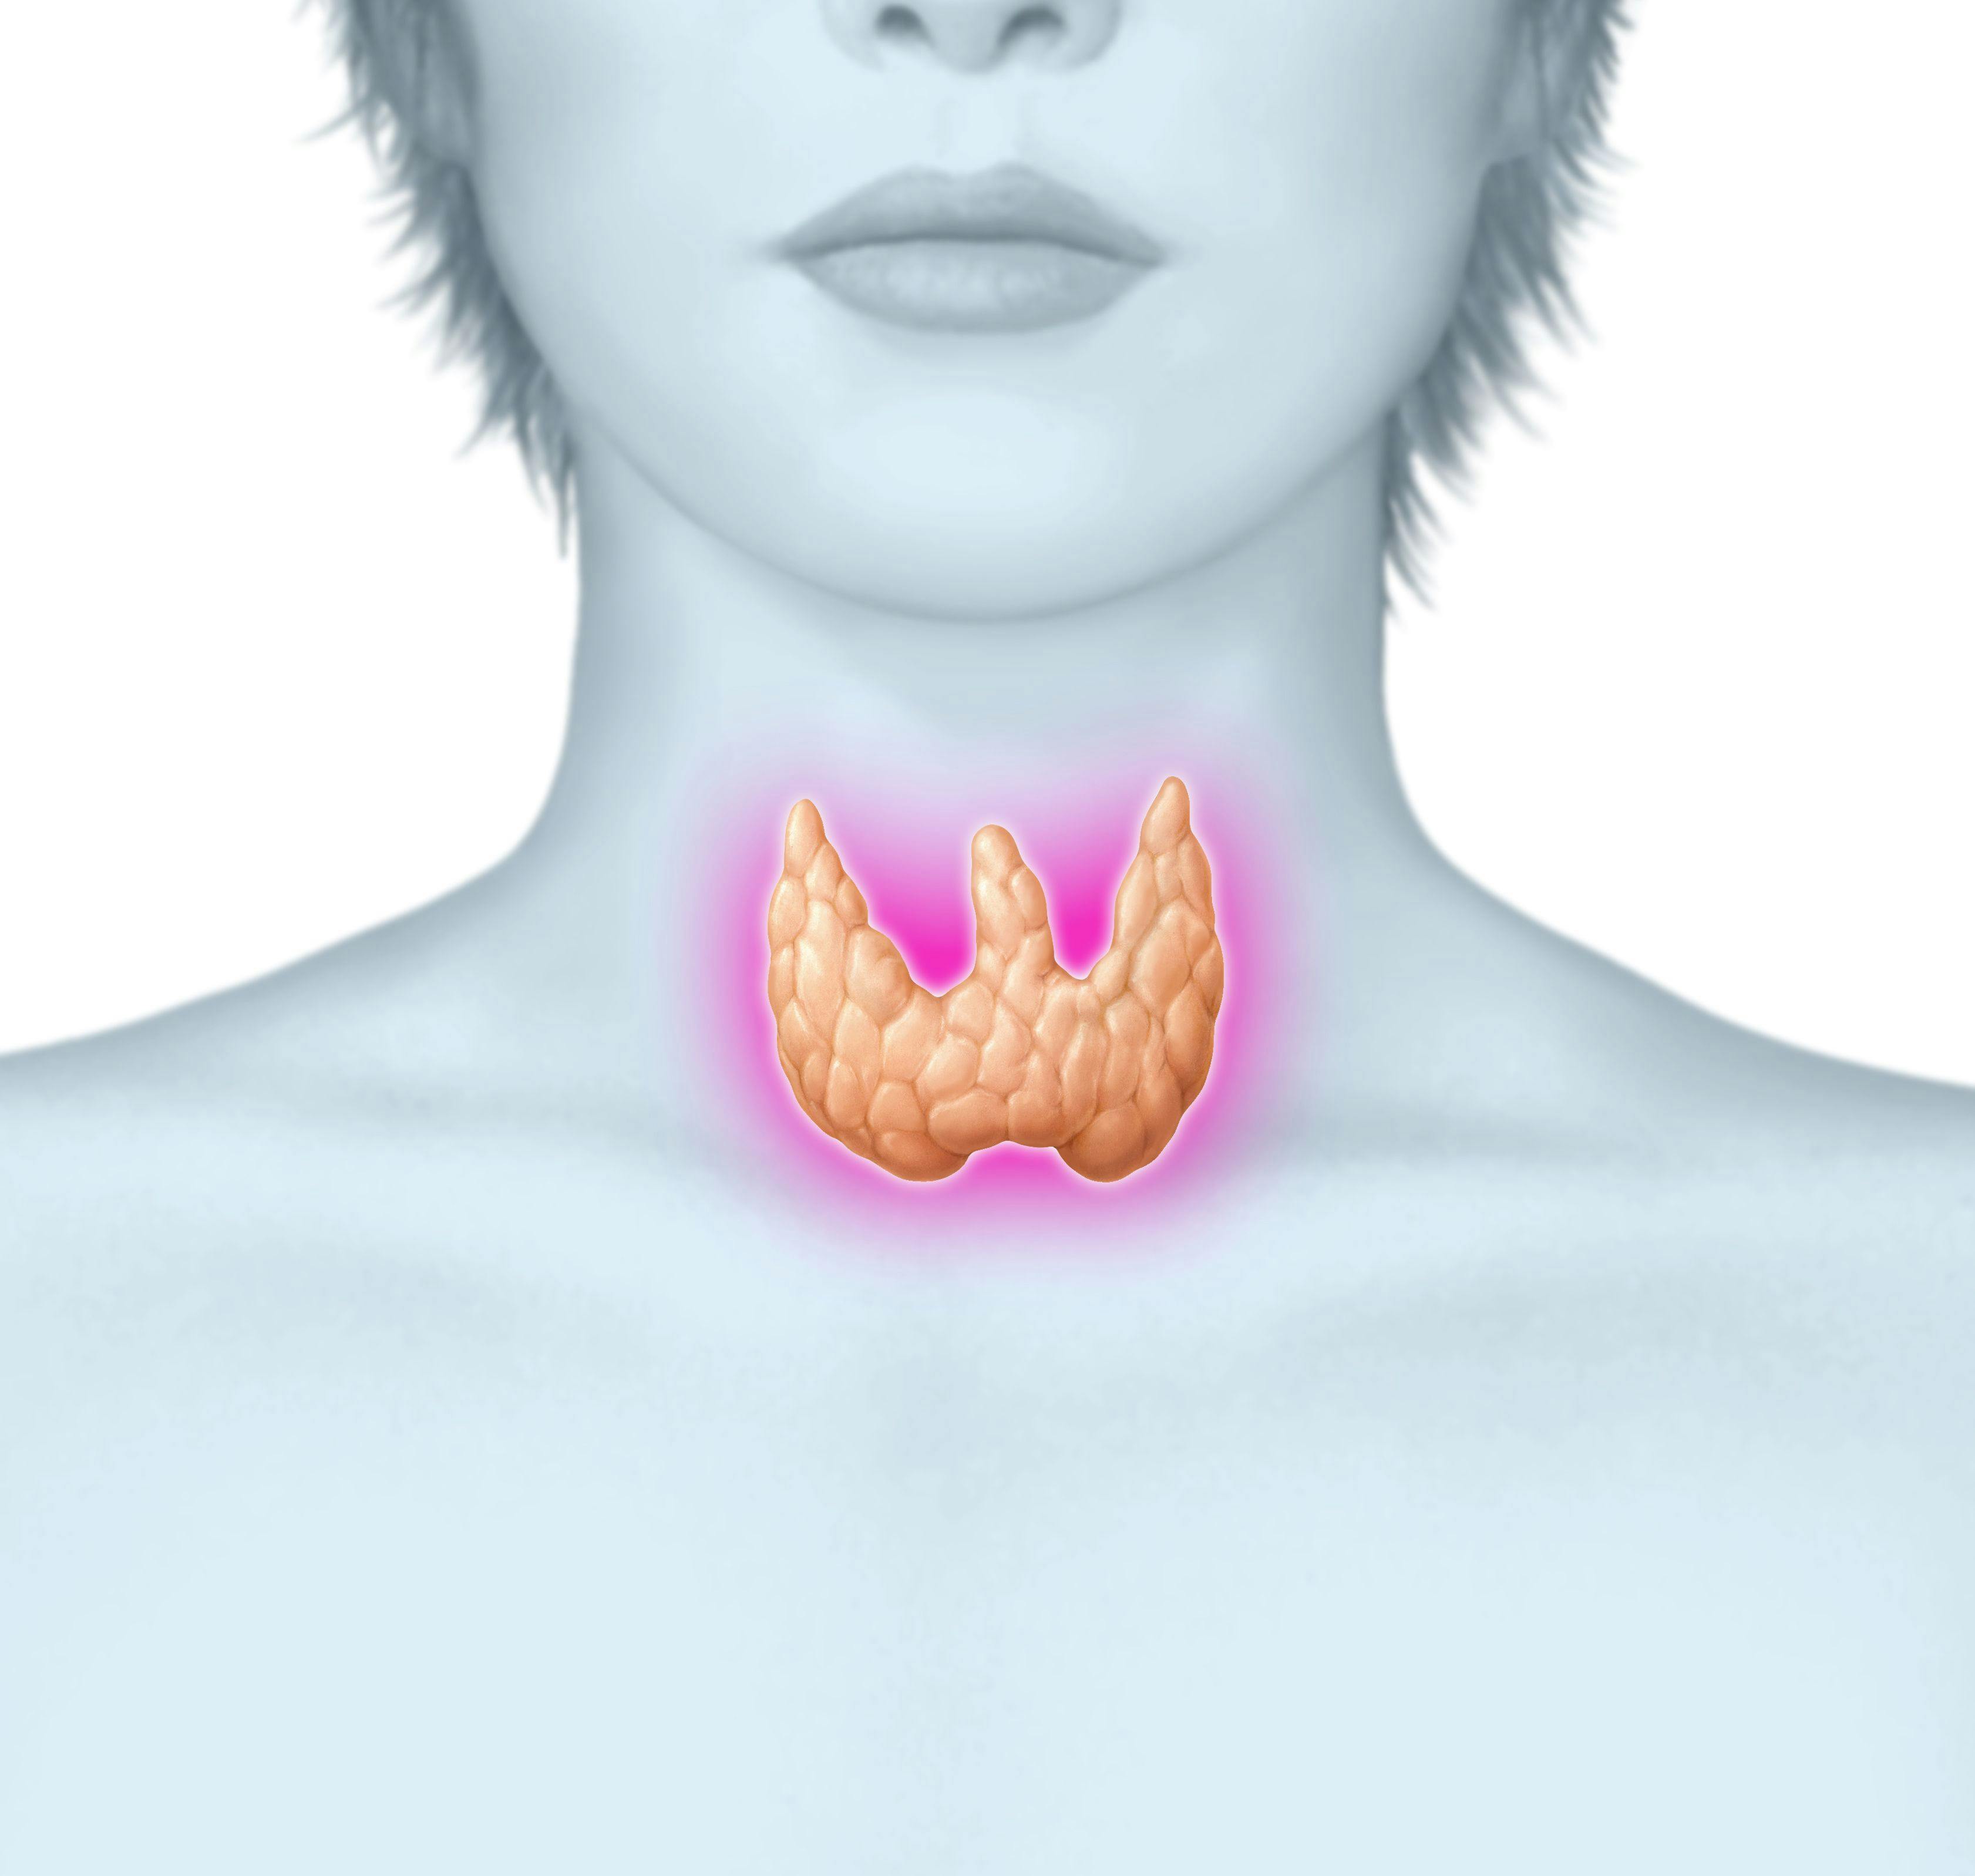 Treatment Doesn't Improve Subclinical Hypothyroidism Symptoms